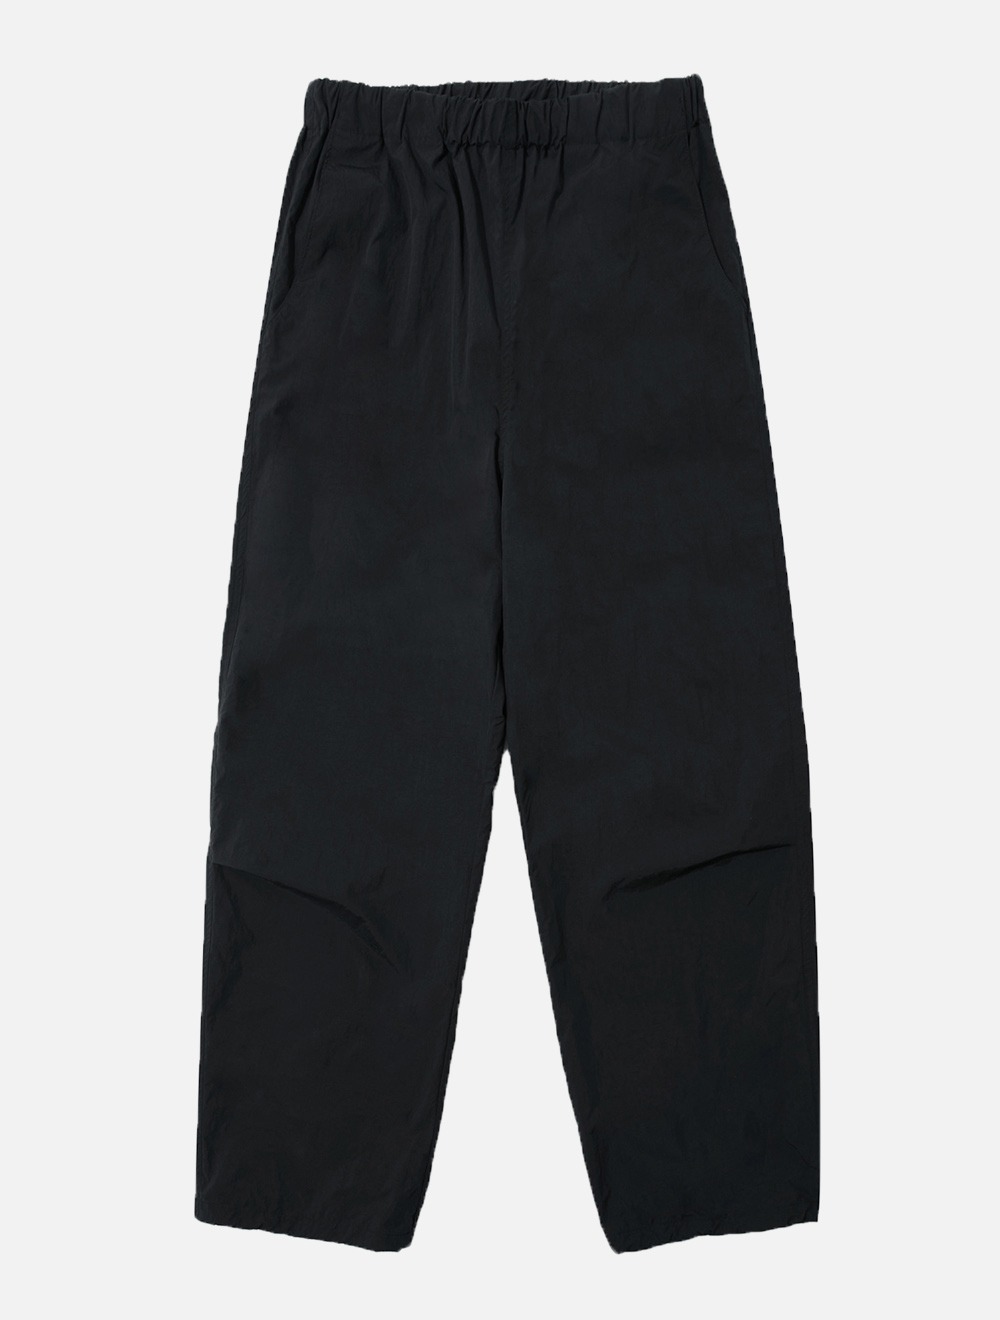 easy nylon pants (black)